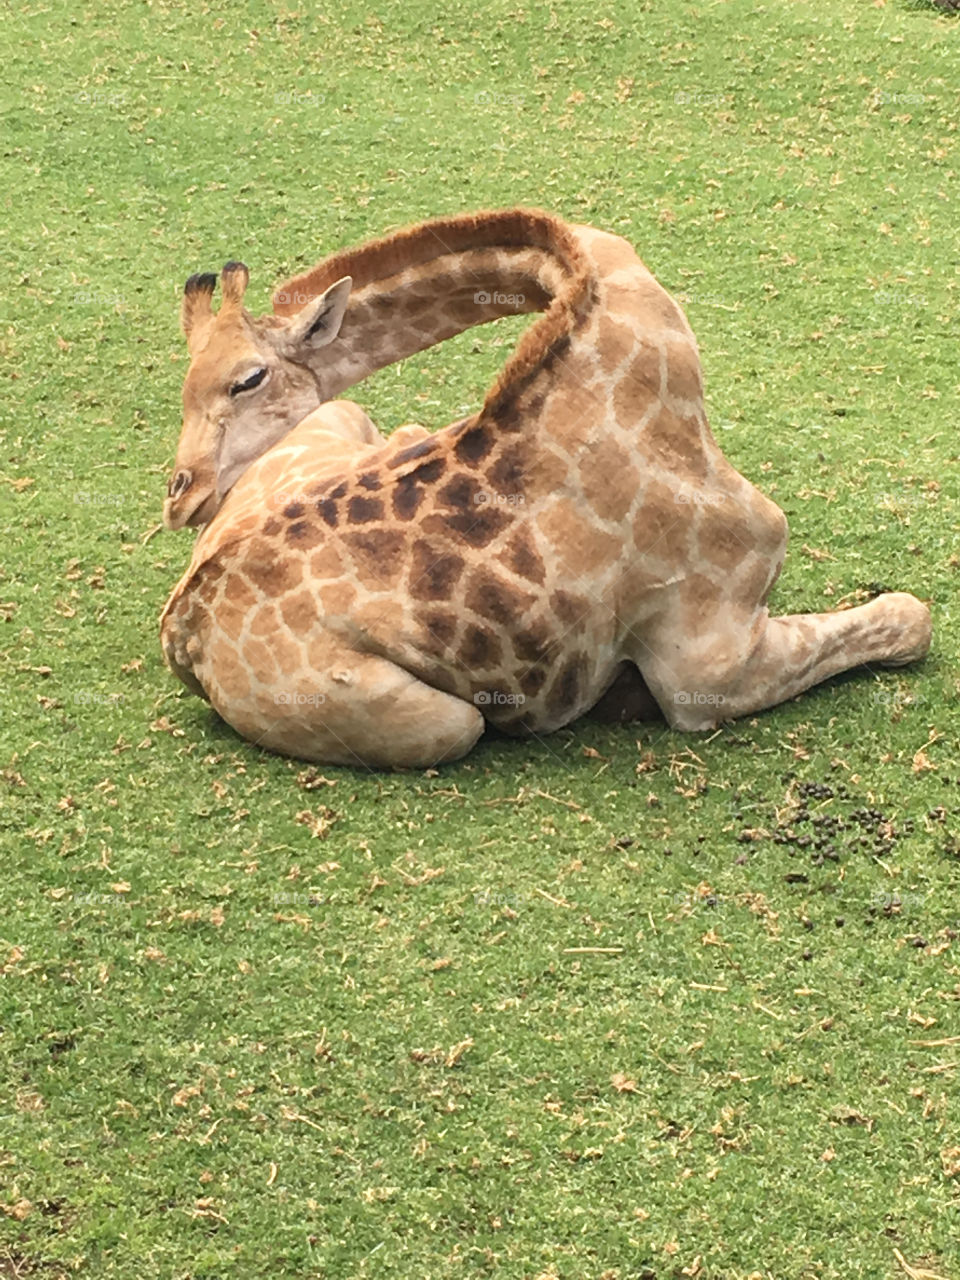 Juvenile giraffe sleeping